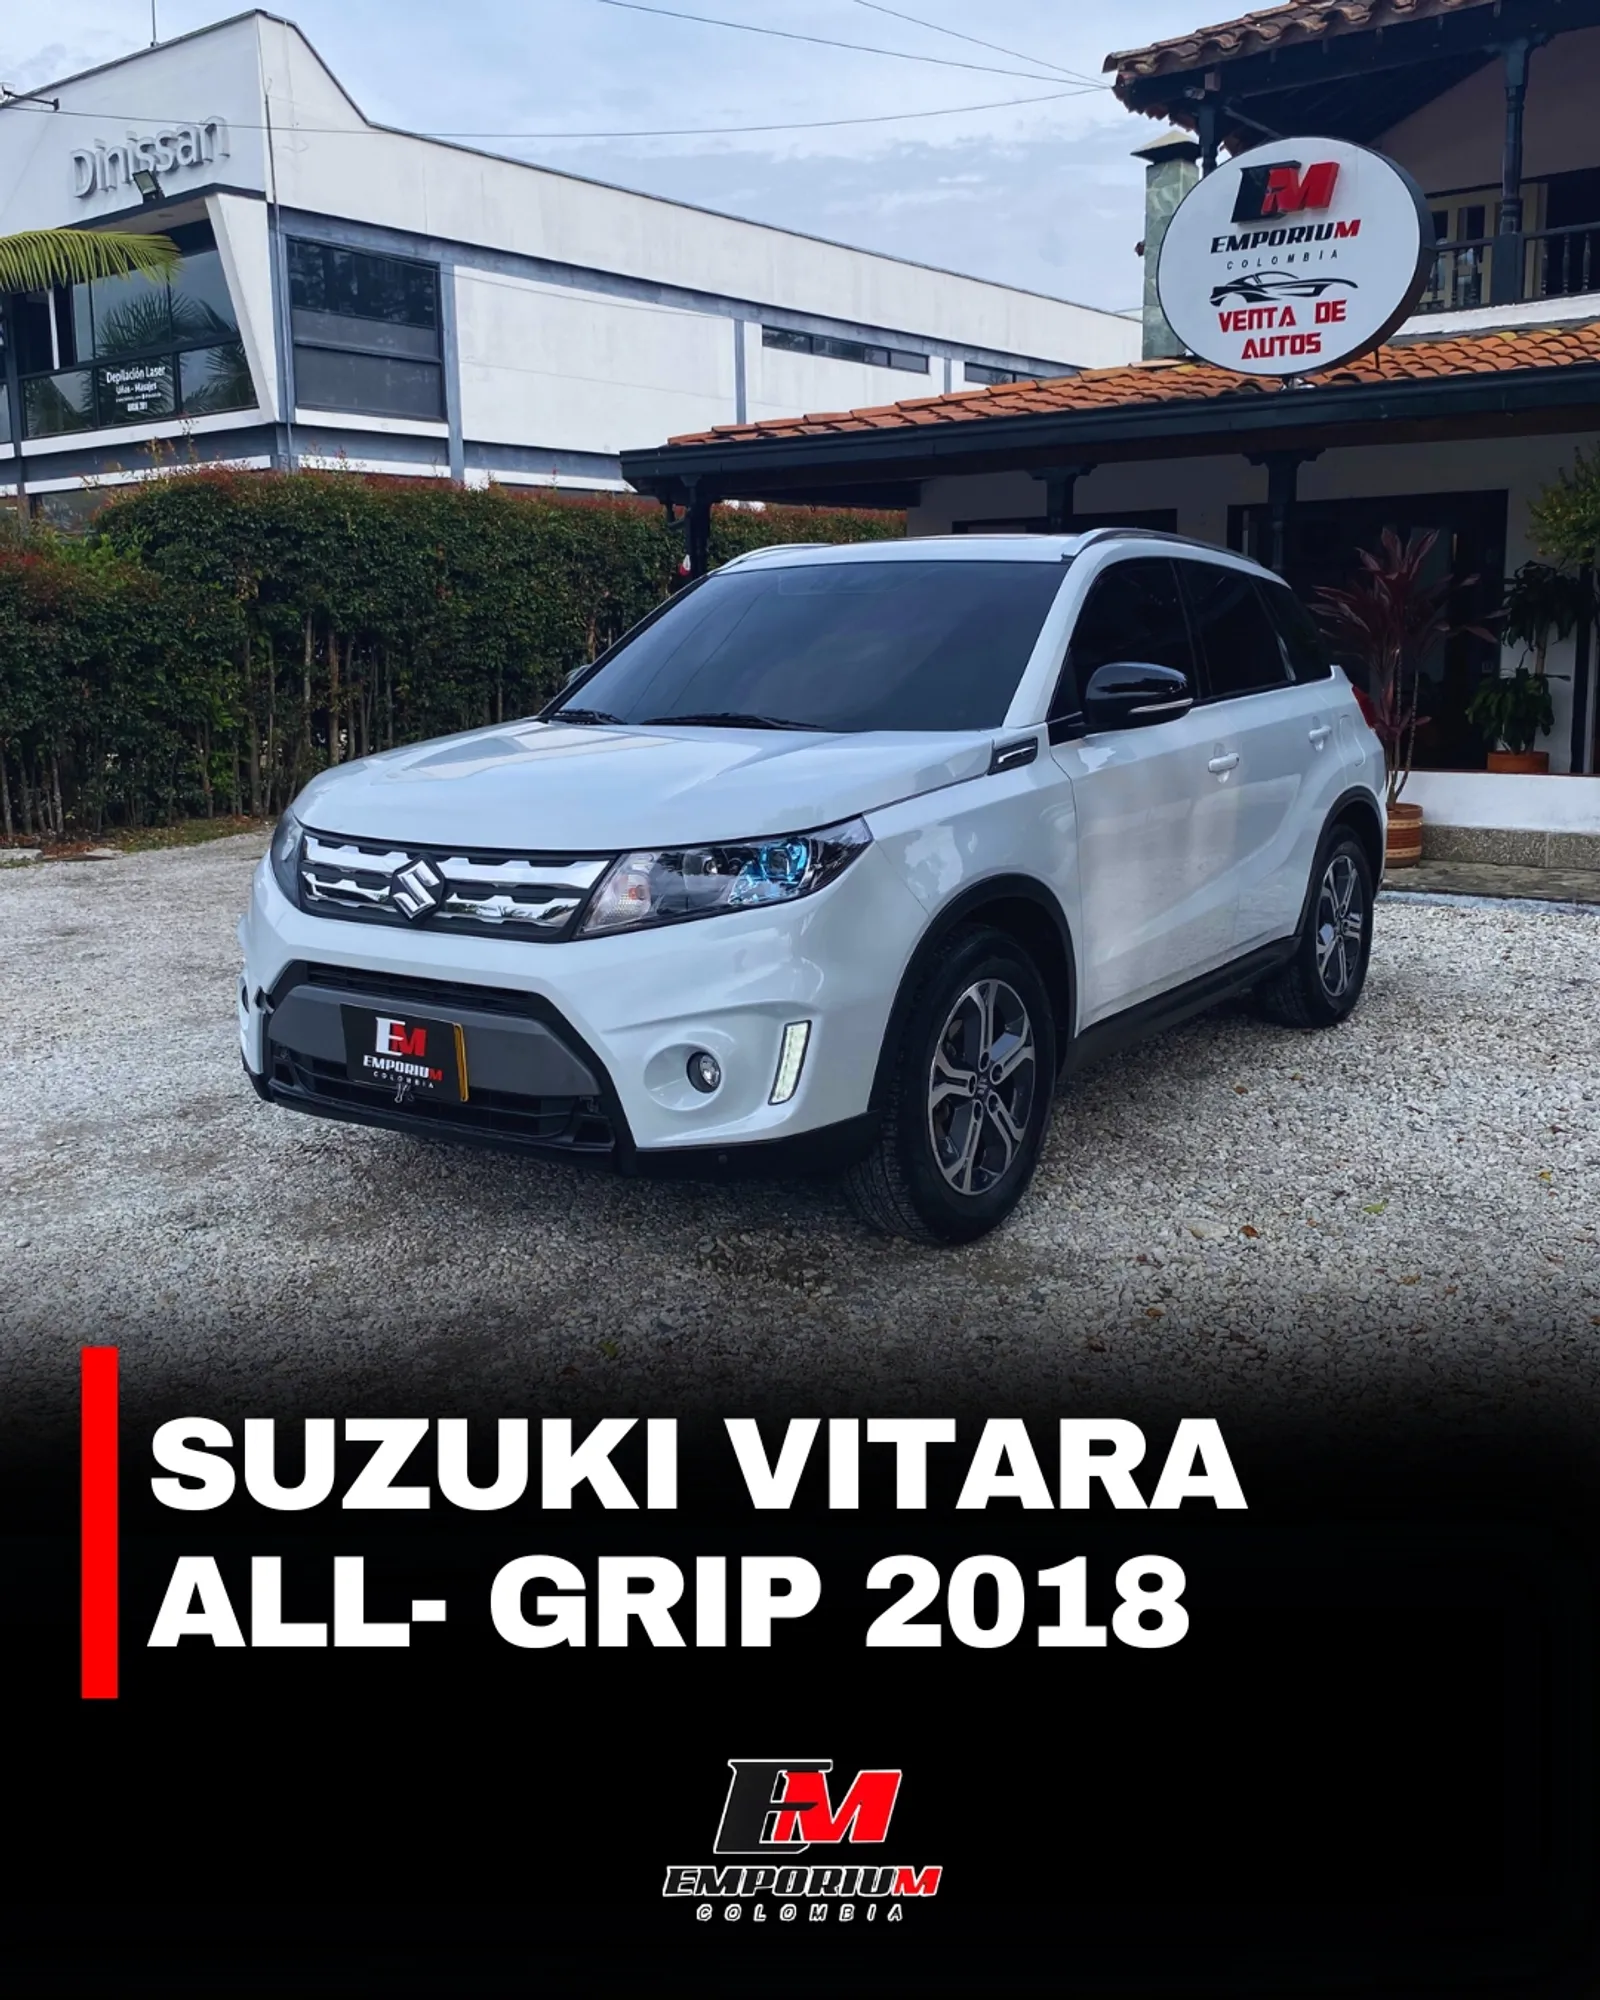 Suzuki Vitara All-Grip 2018